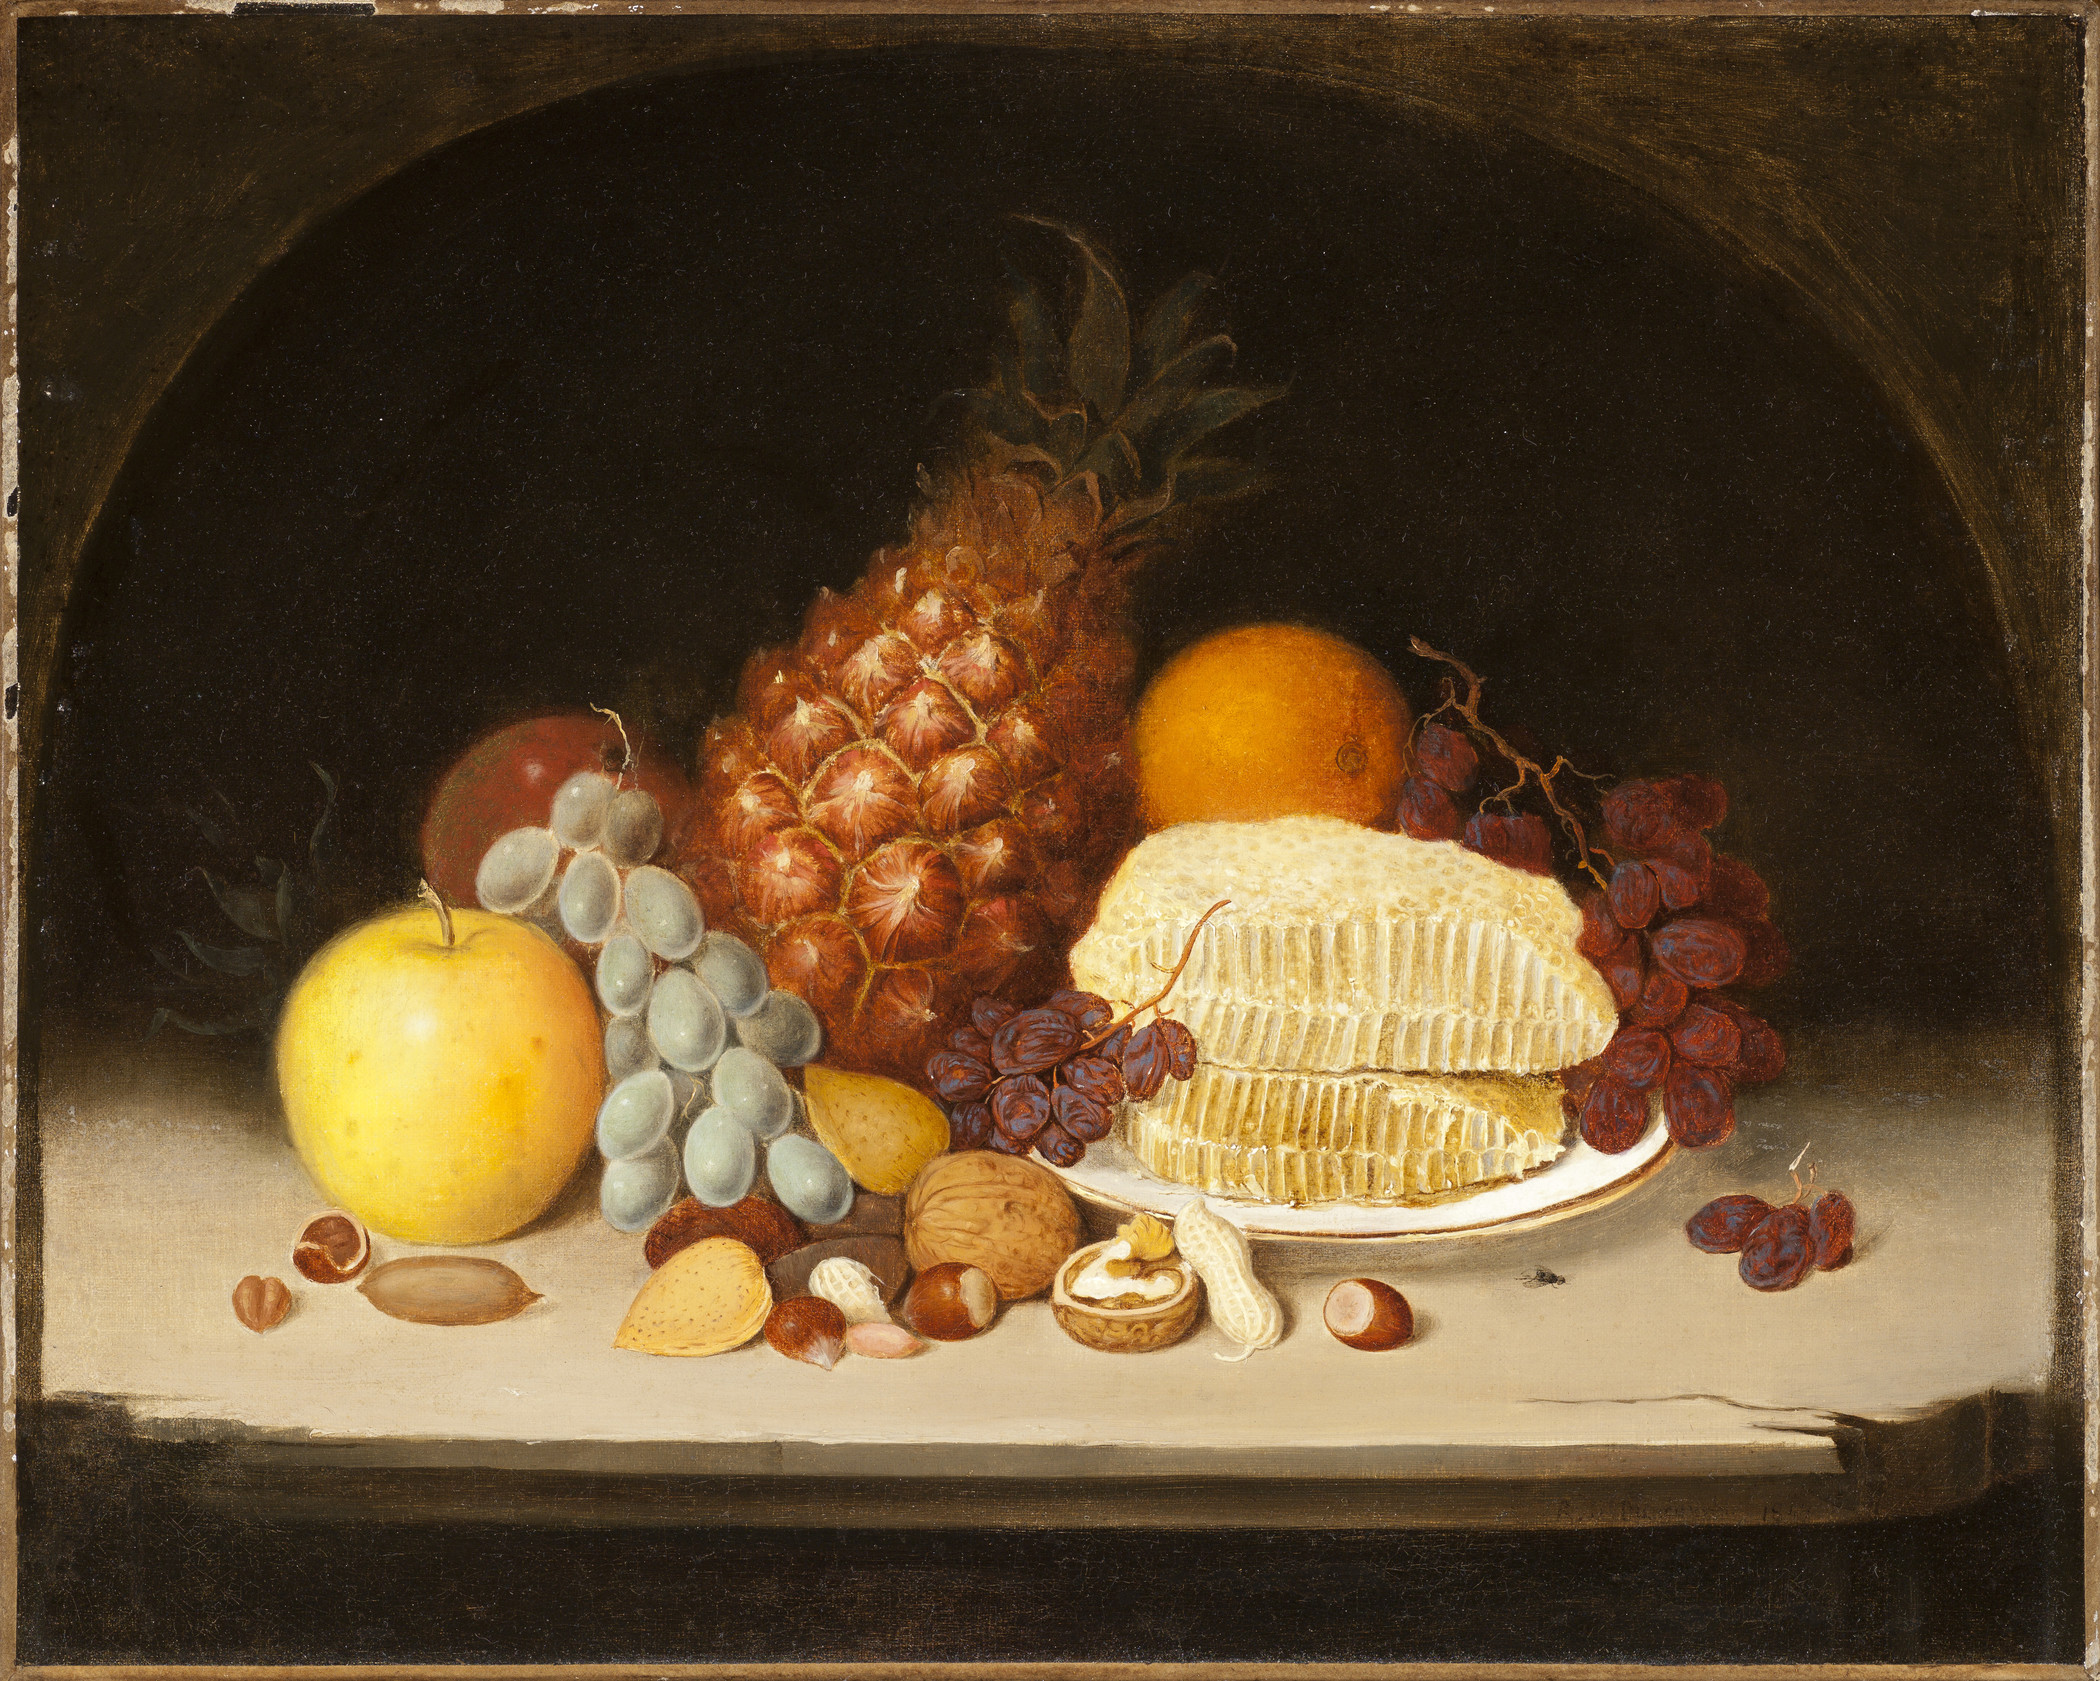 Stillleben by Robert Duncanson - 1849 - 41 x 51,28 cm LACMA, Los Angeles County Museum of Art